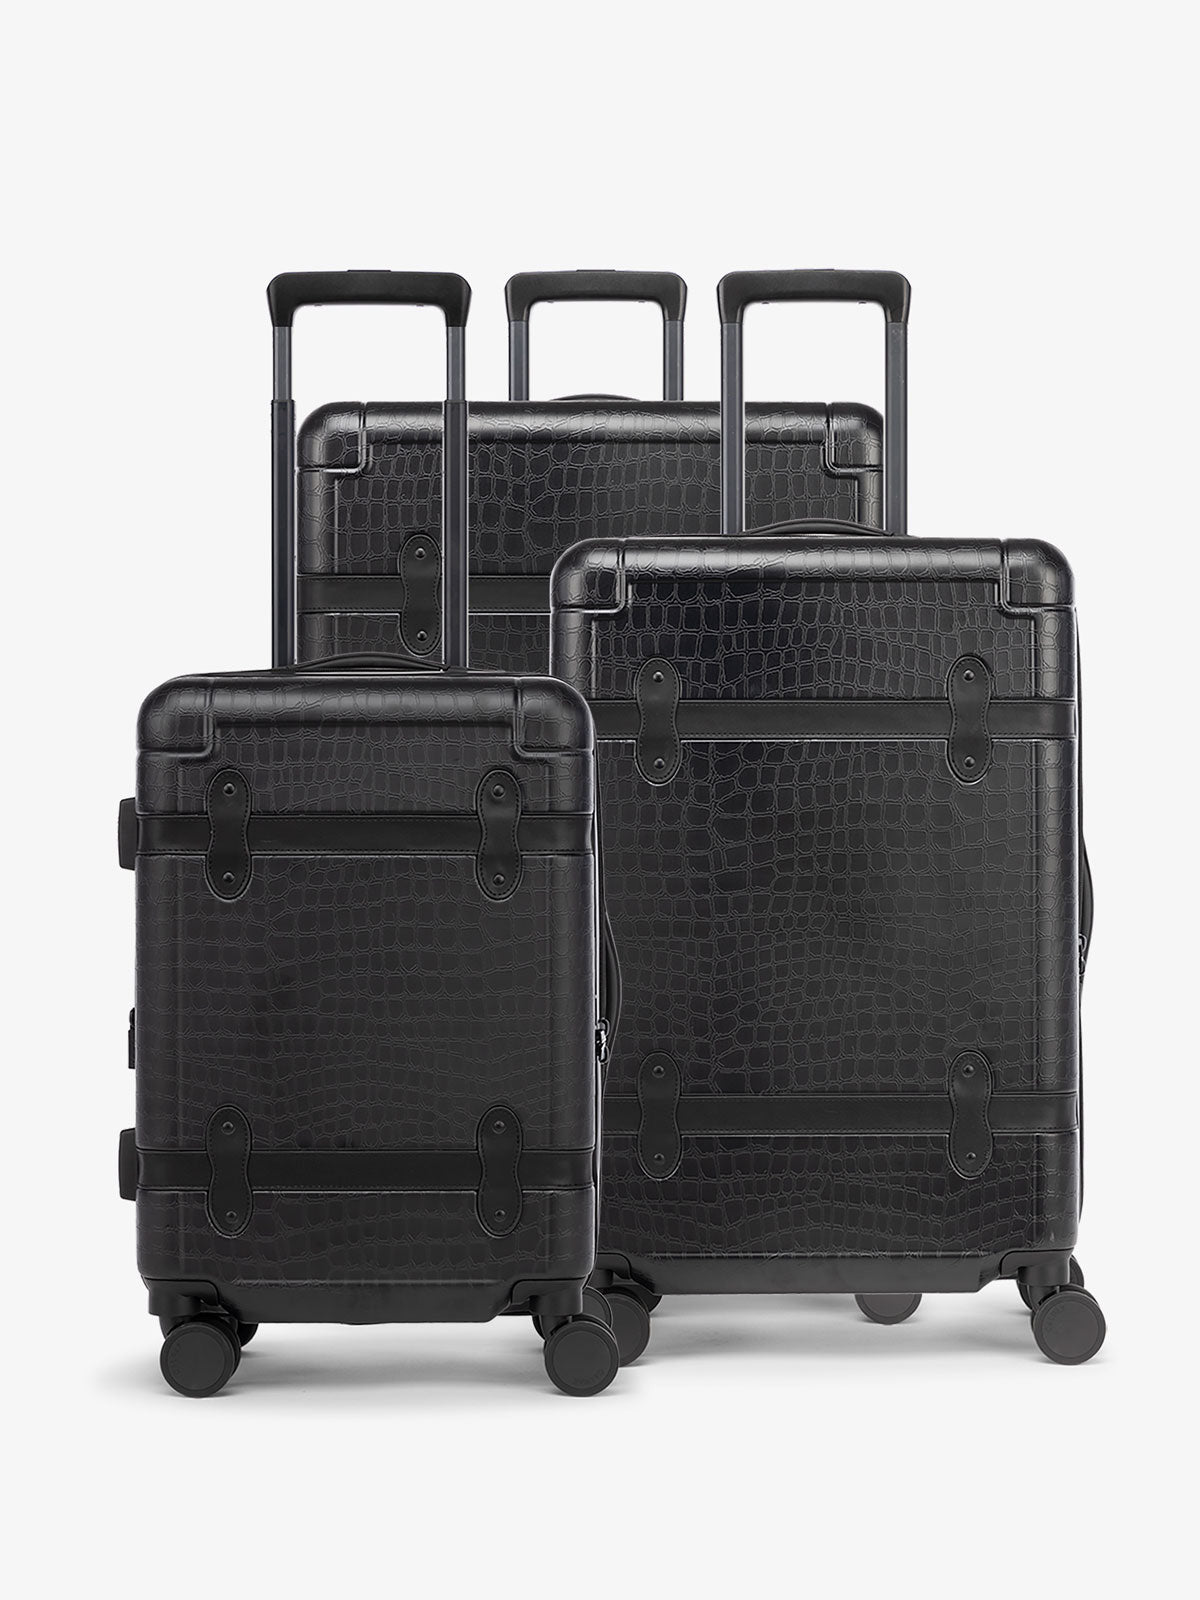 CALPAK set of 3 Trnk black luggage in vintage trunk style; LTK3000-BLACK-CROC